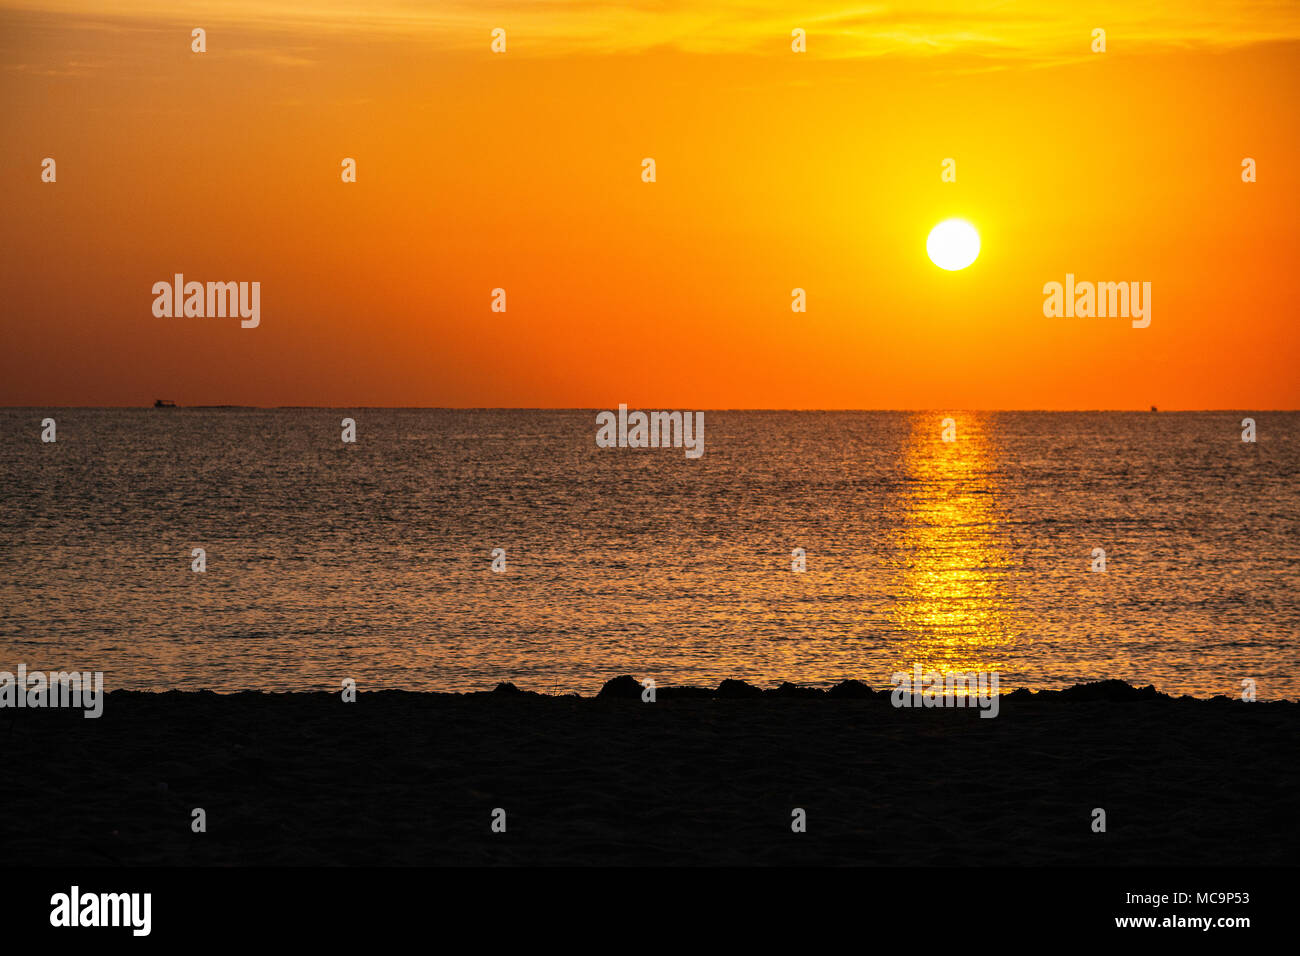 Sunrise, sunset on Hollywood beach, Florida with silhouettes. Stock Photo